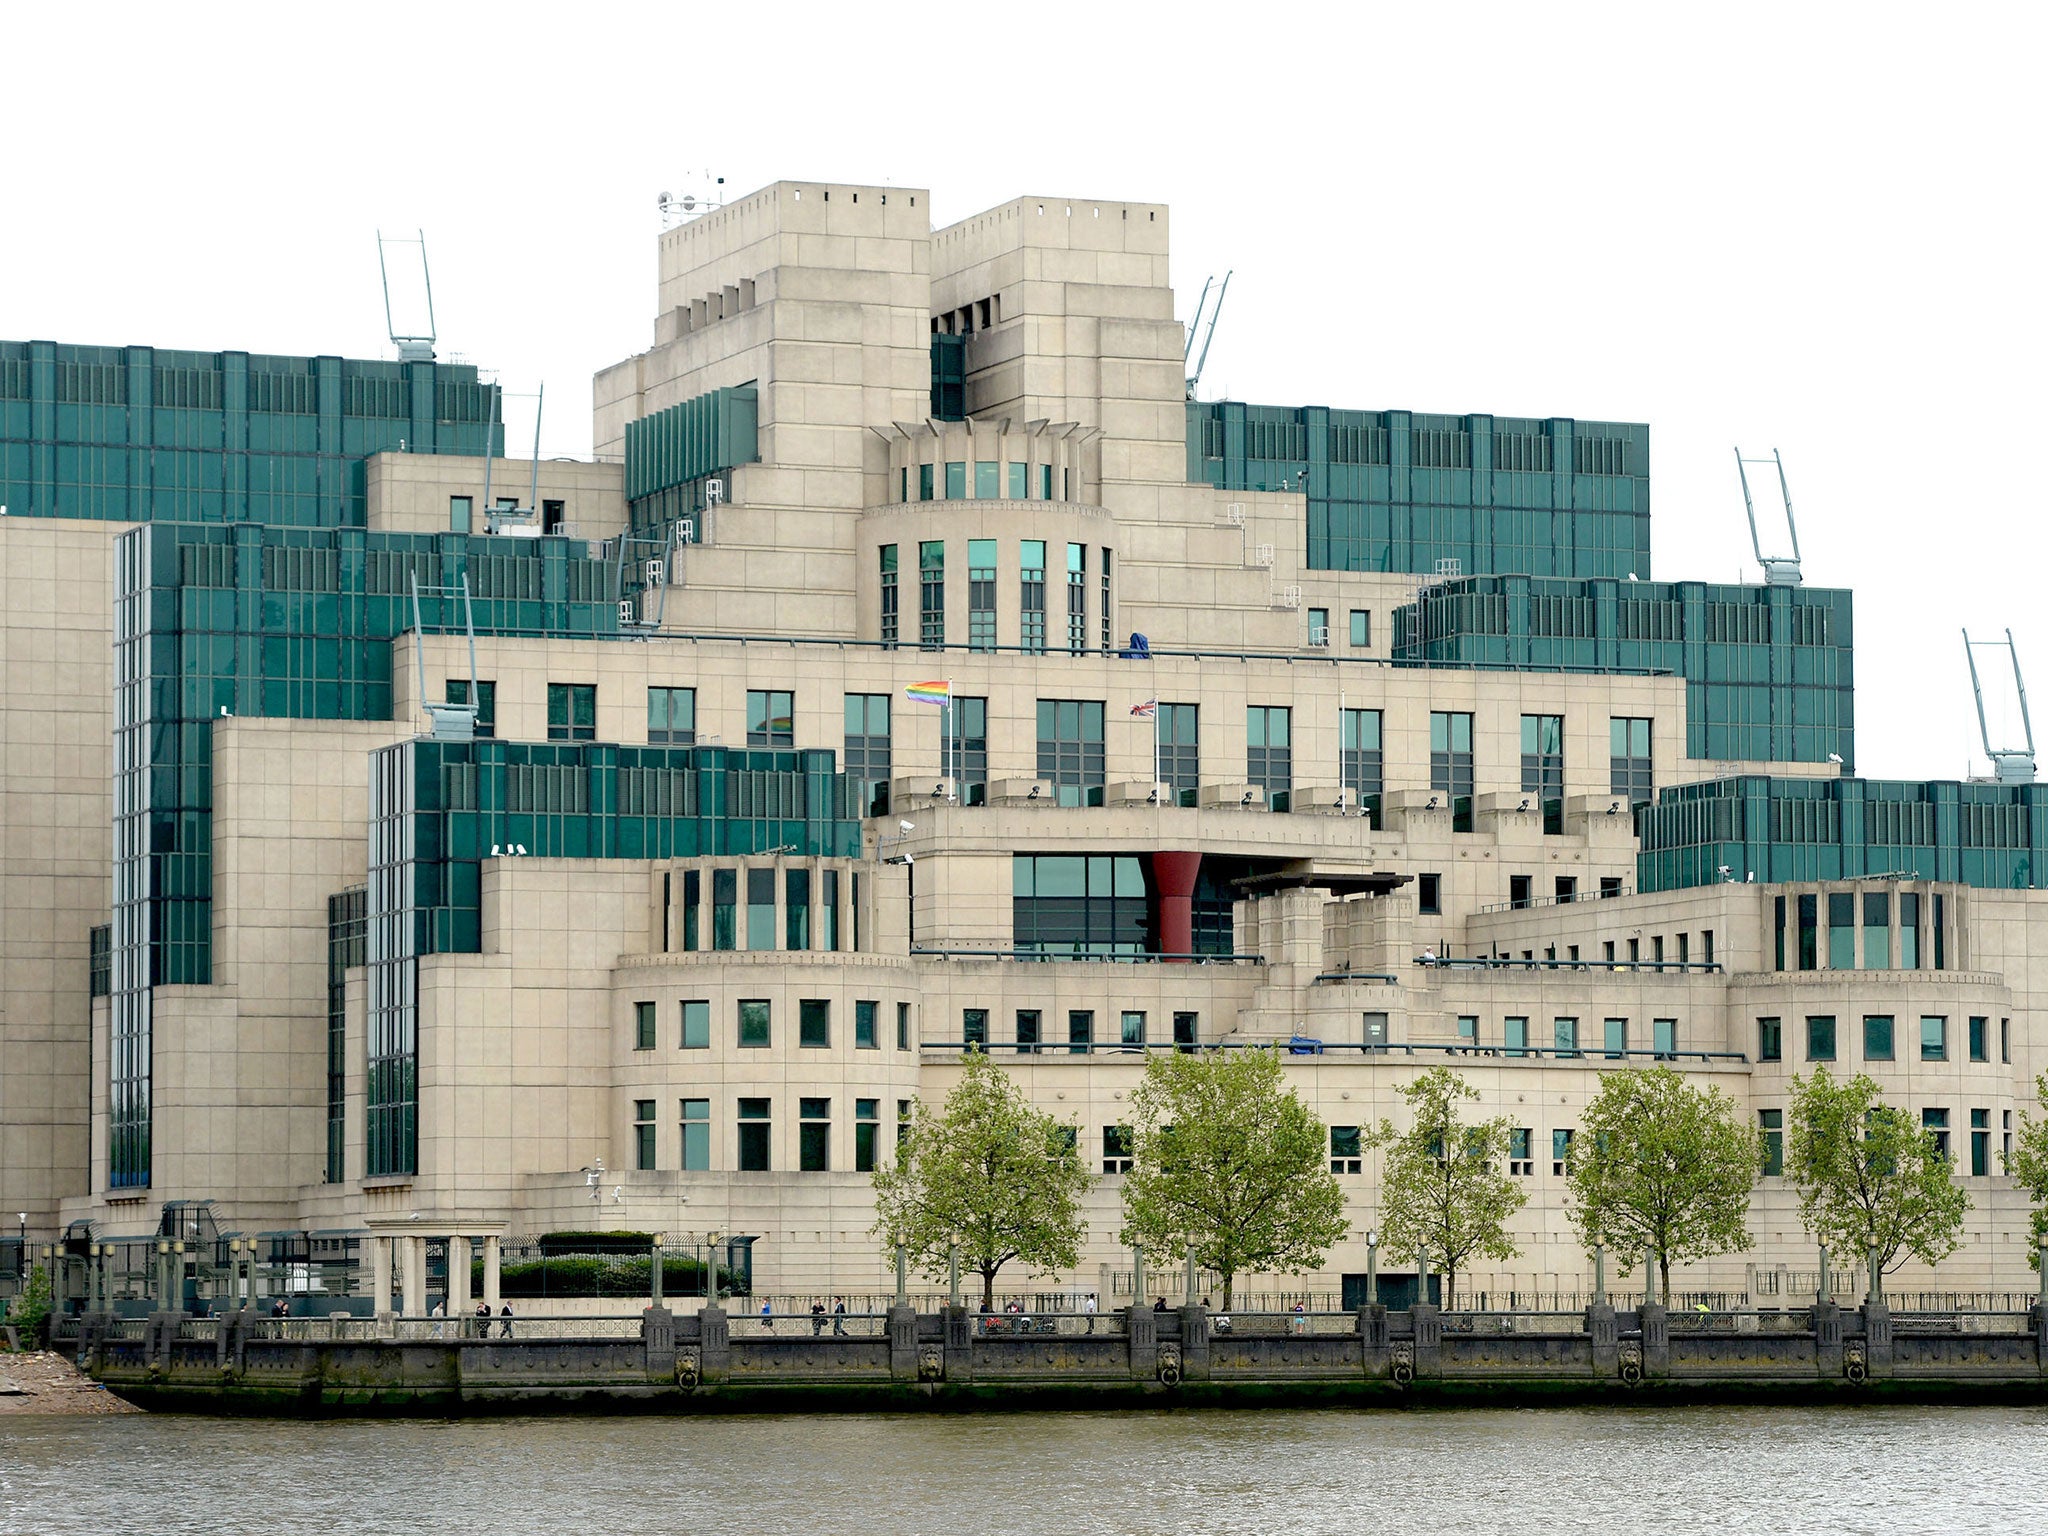 The MI6 headquarters in London